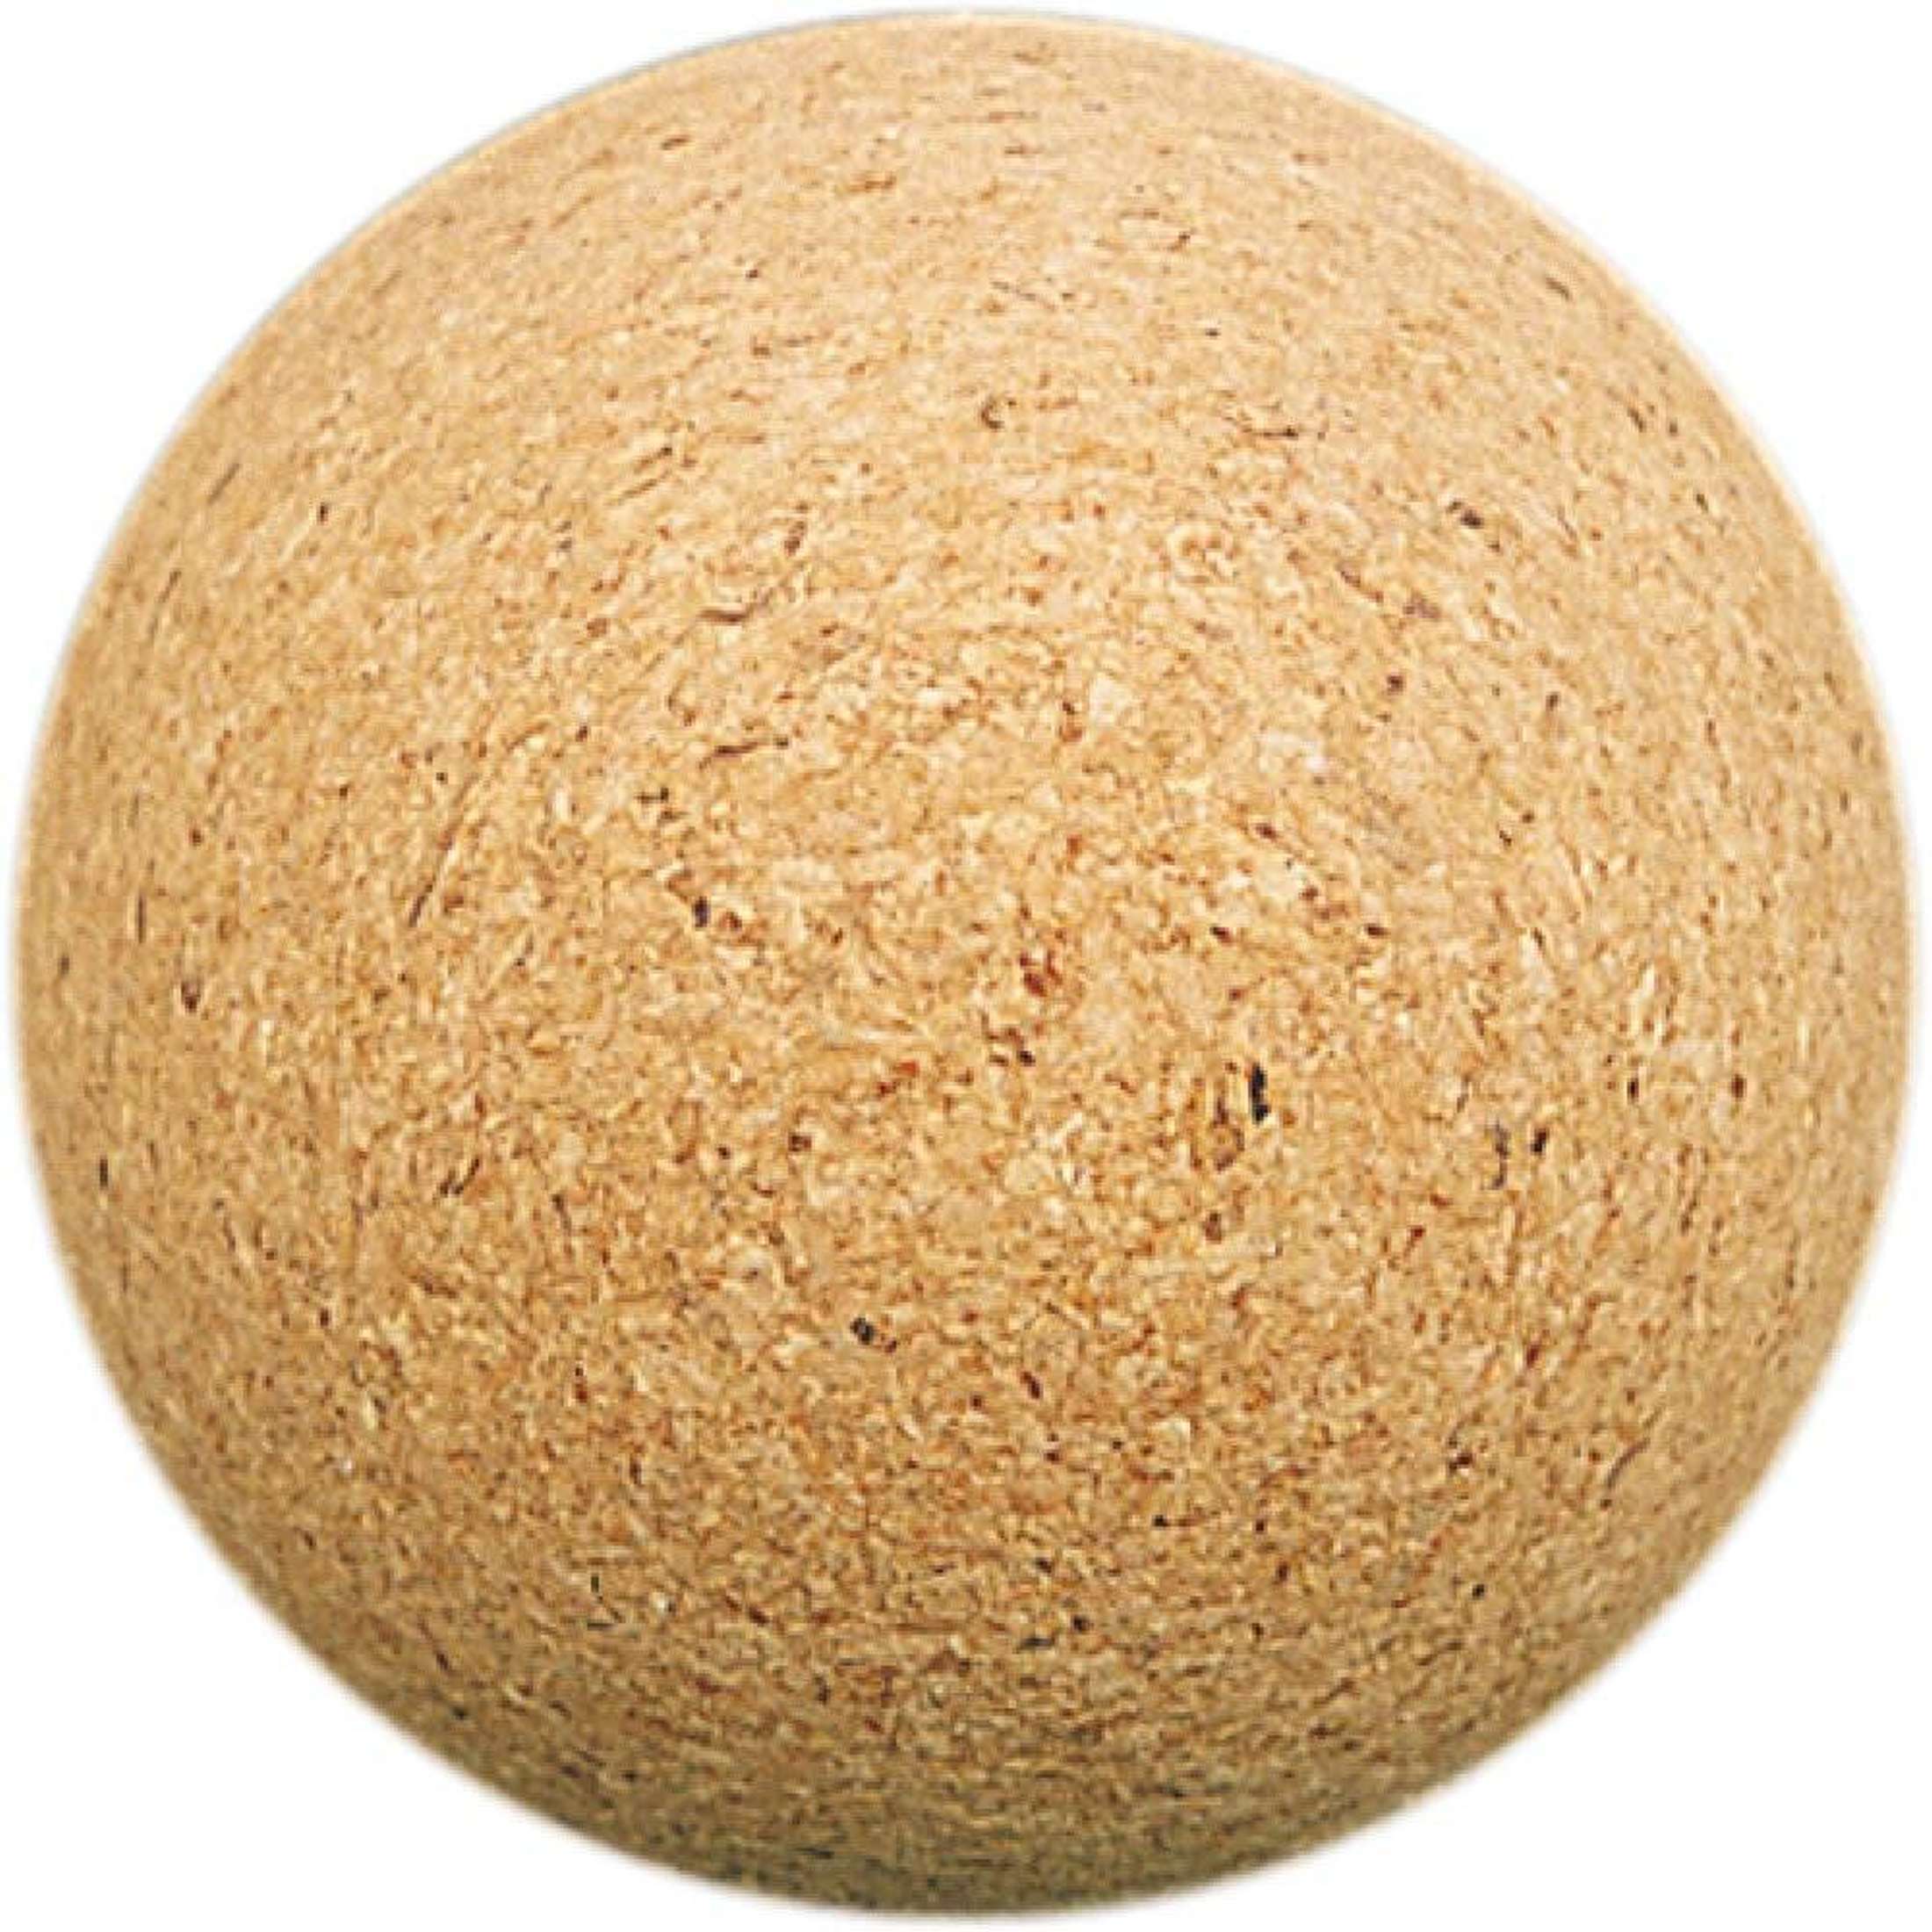 Cork kicker ball, diameter 35mm-1